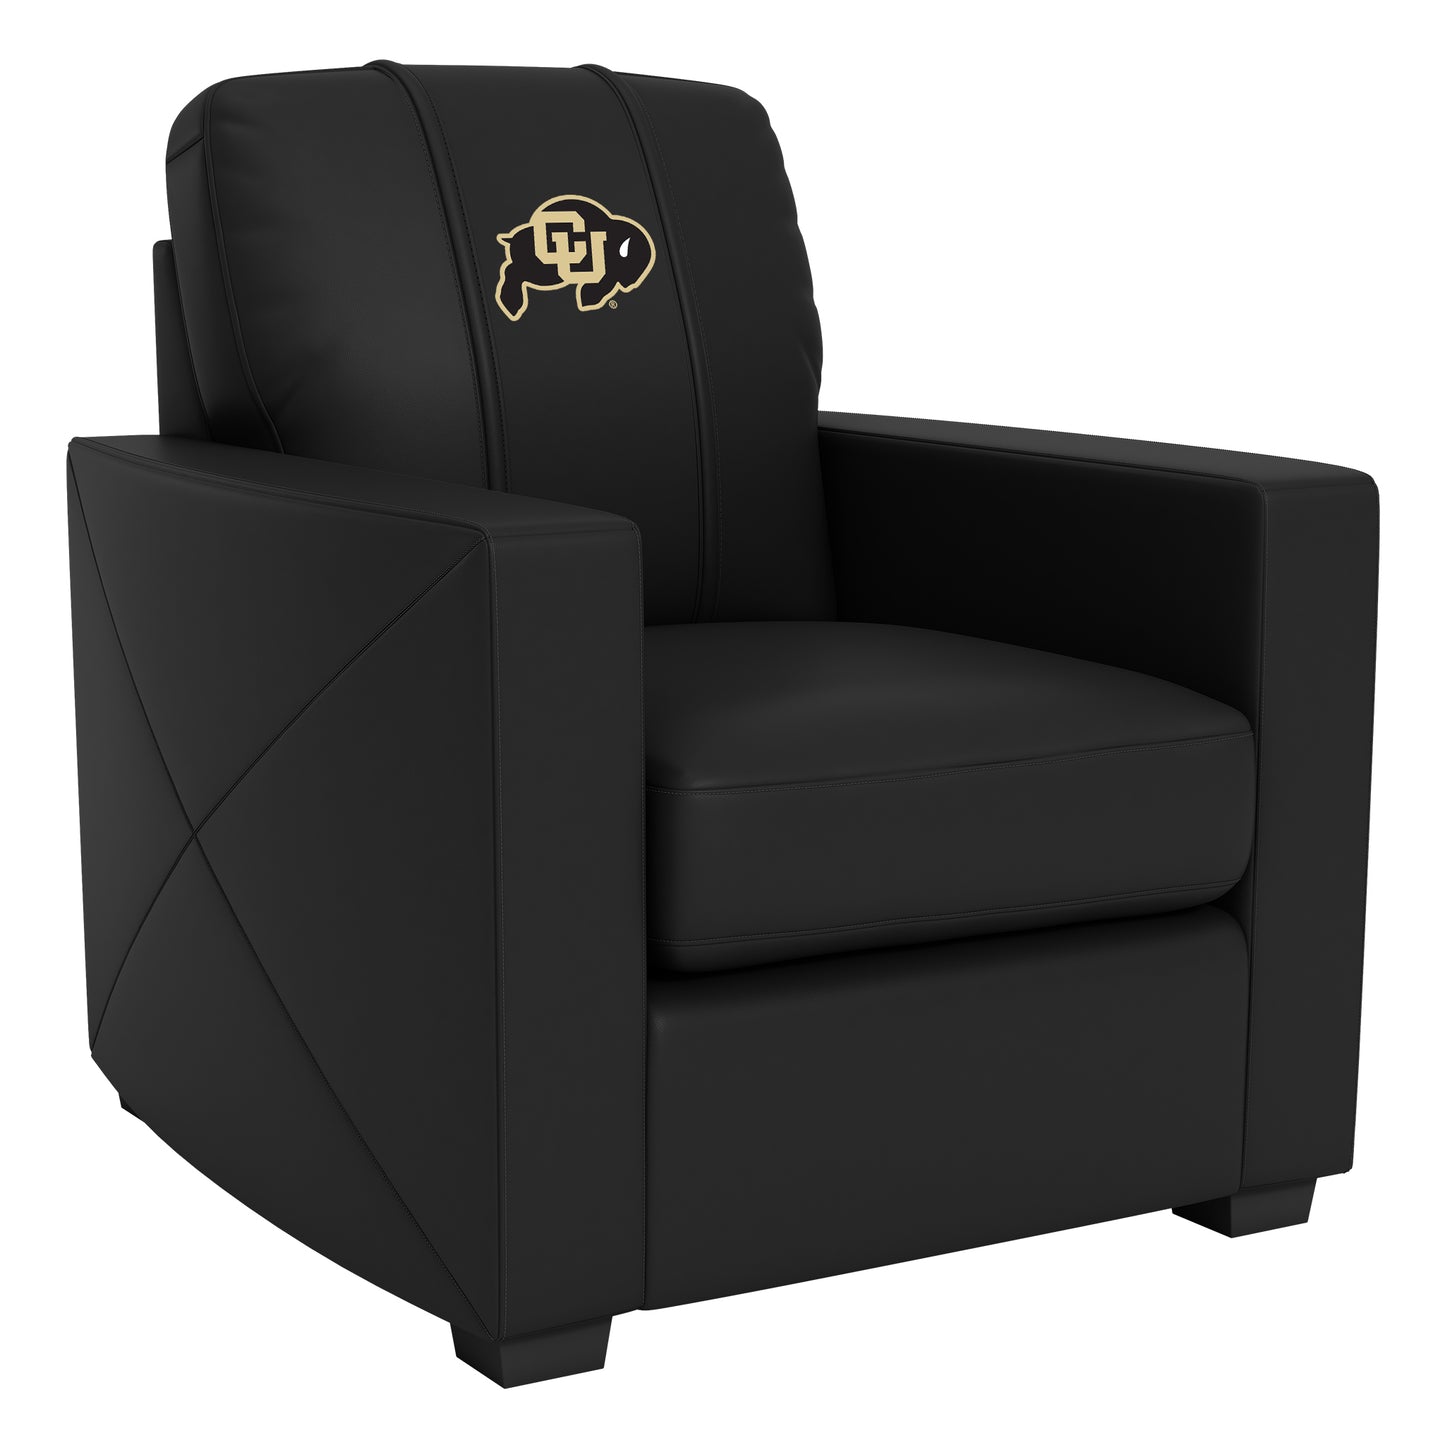 Silver Club Chair with Colorado Buffaloes Logo